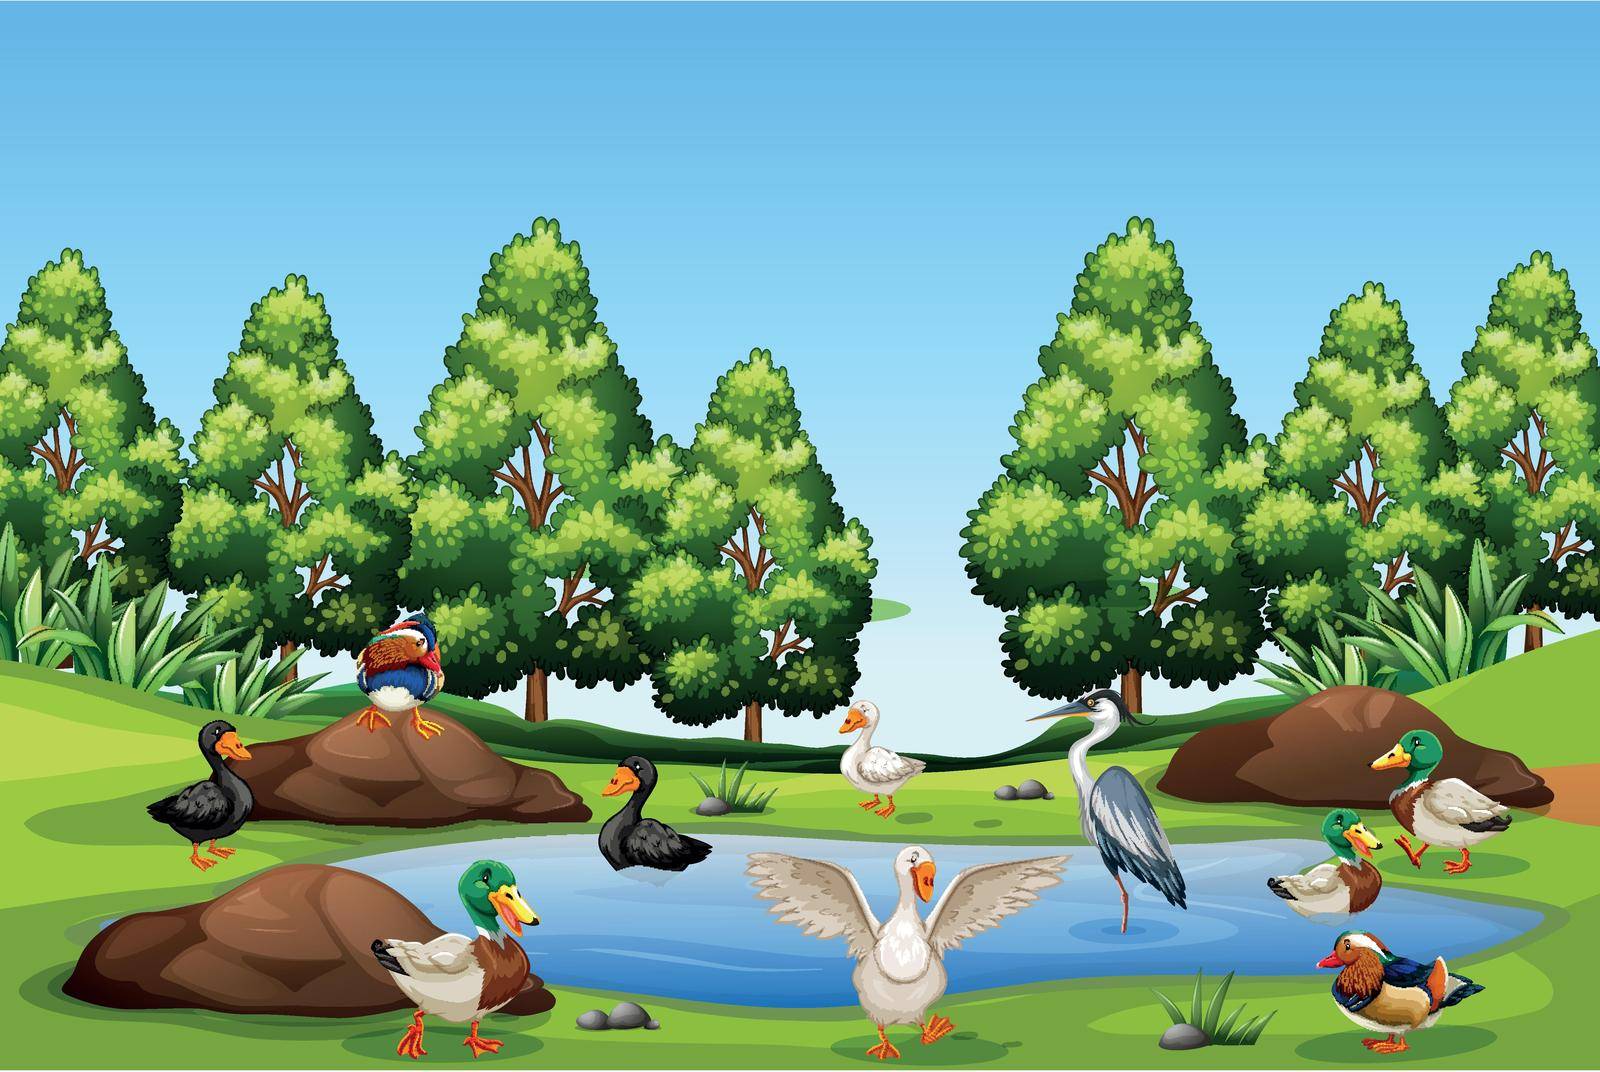 Many bird in nature illustration